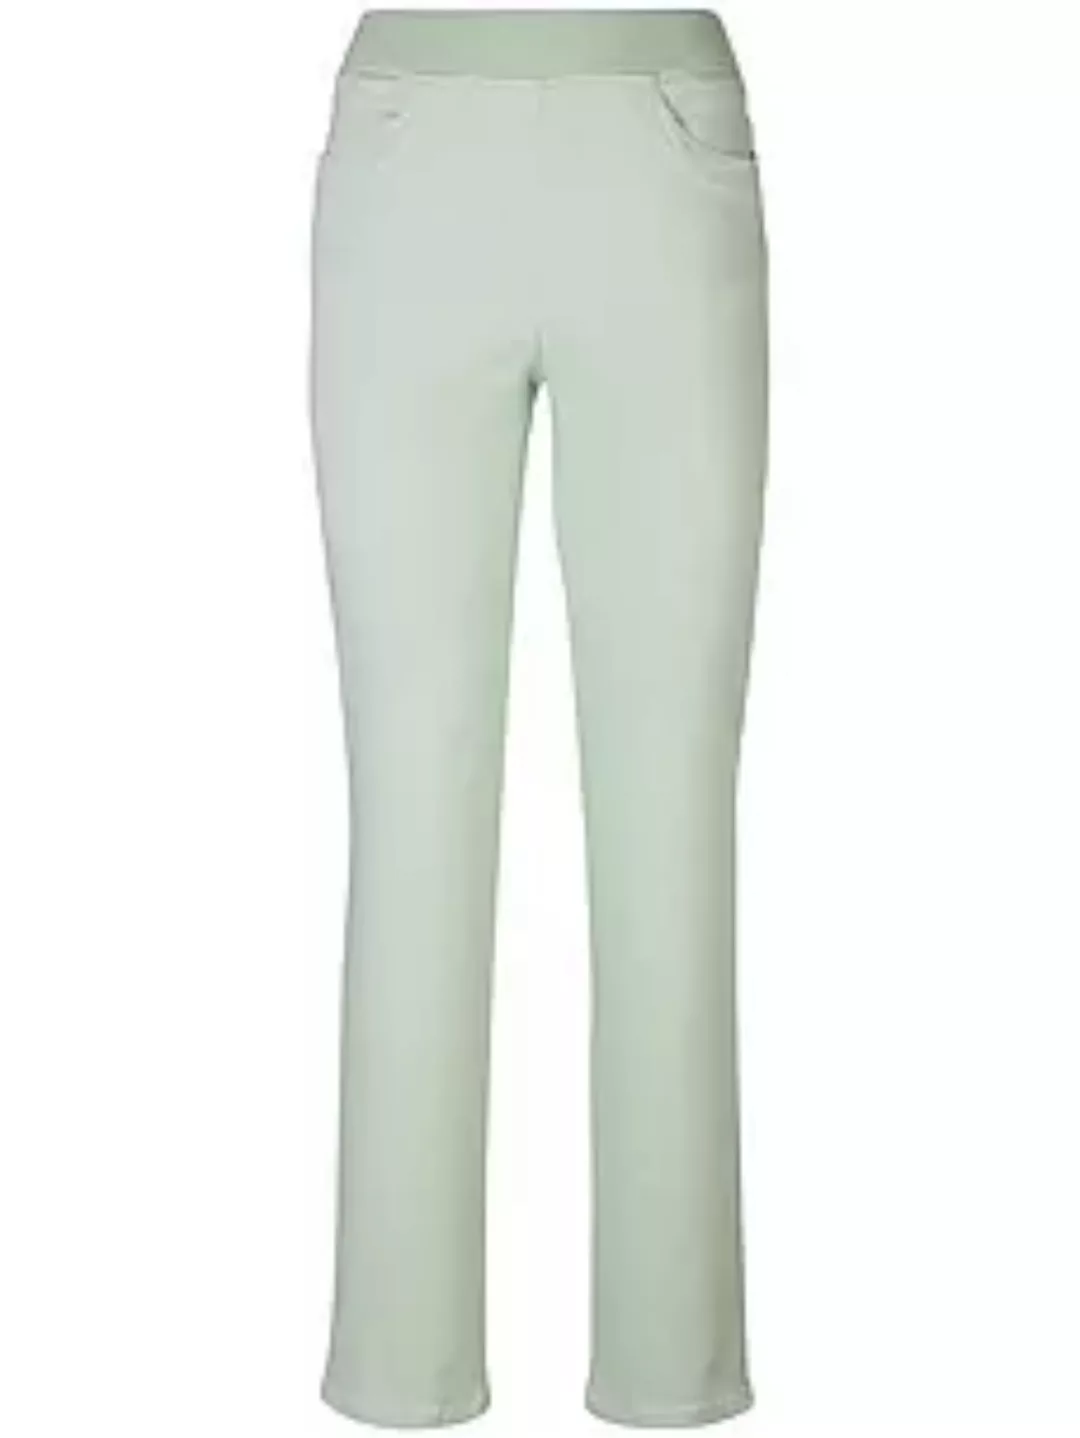 Jeans Modell Pamina Fun Raphaela by Brax grün günstig online kaufen